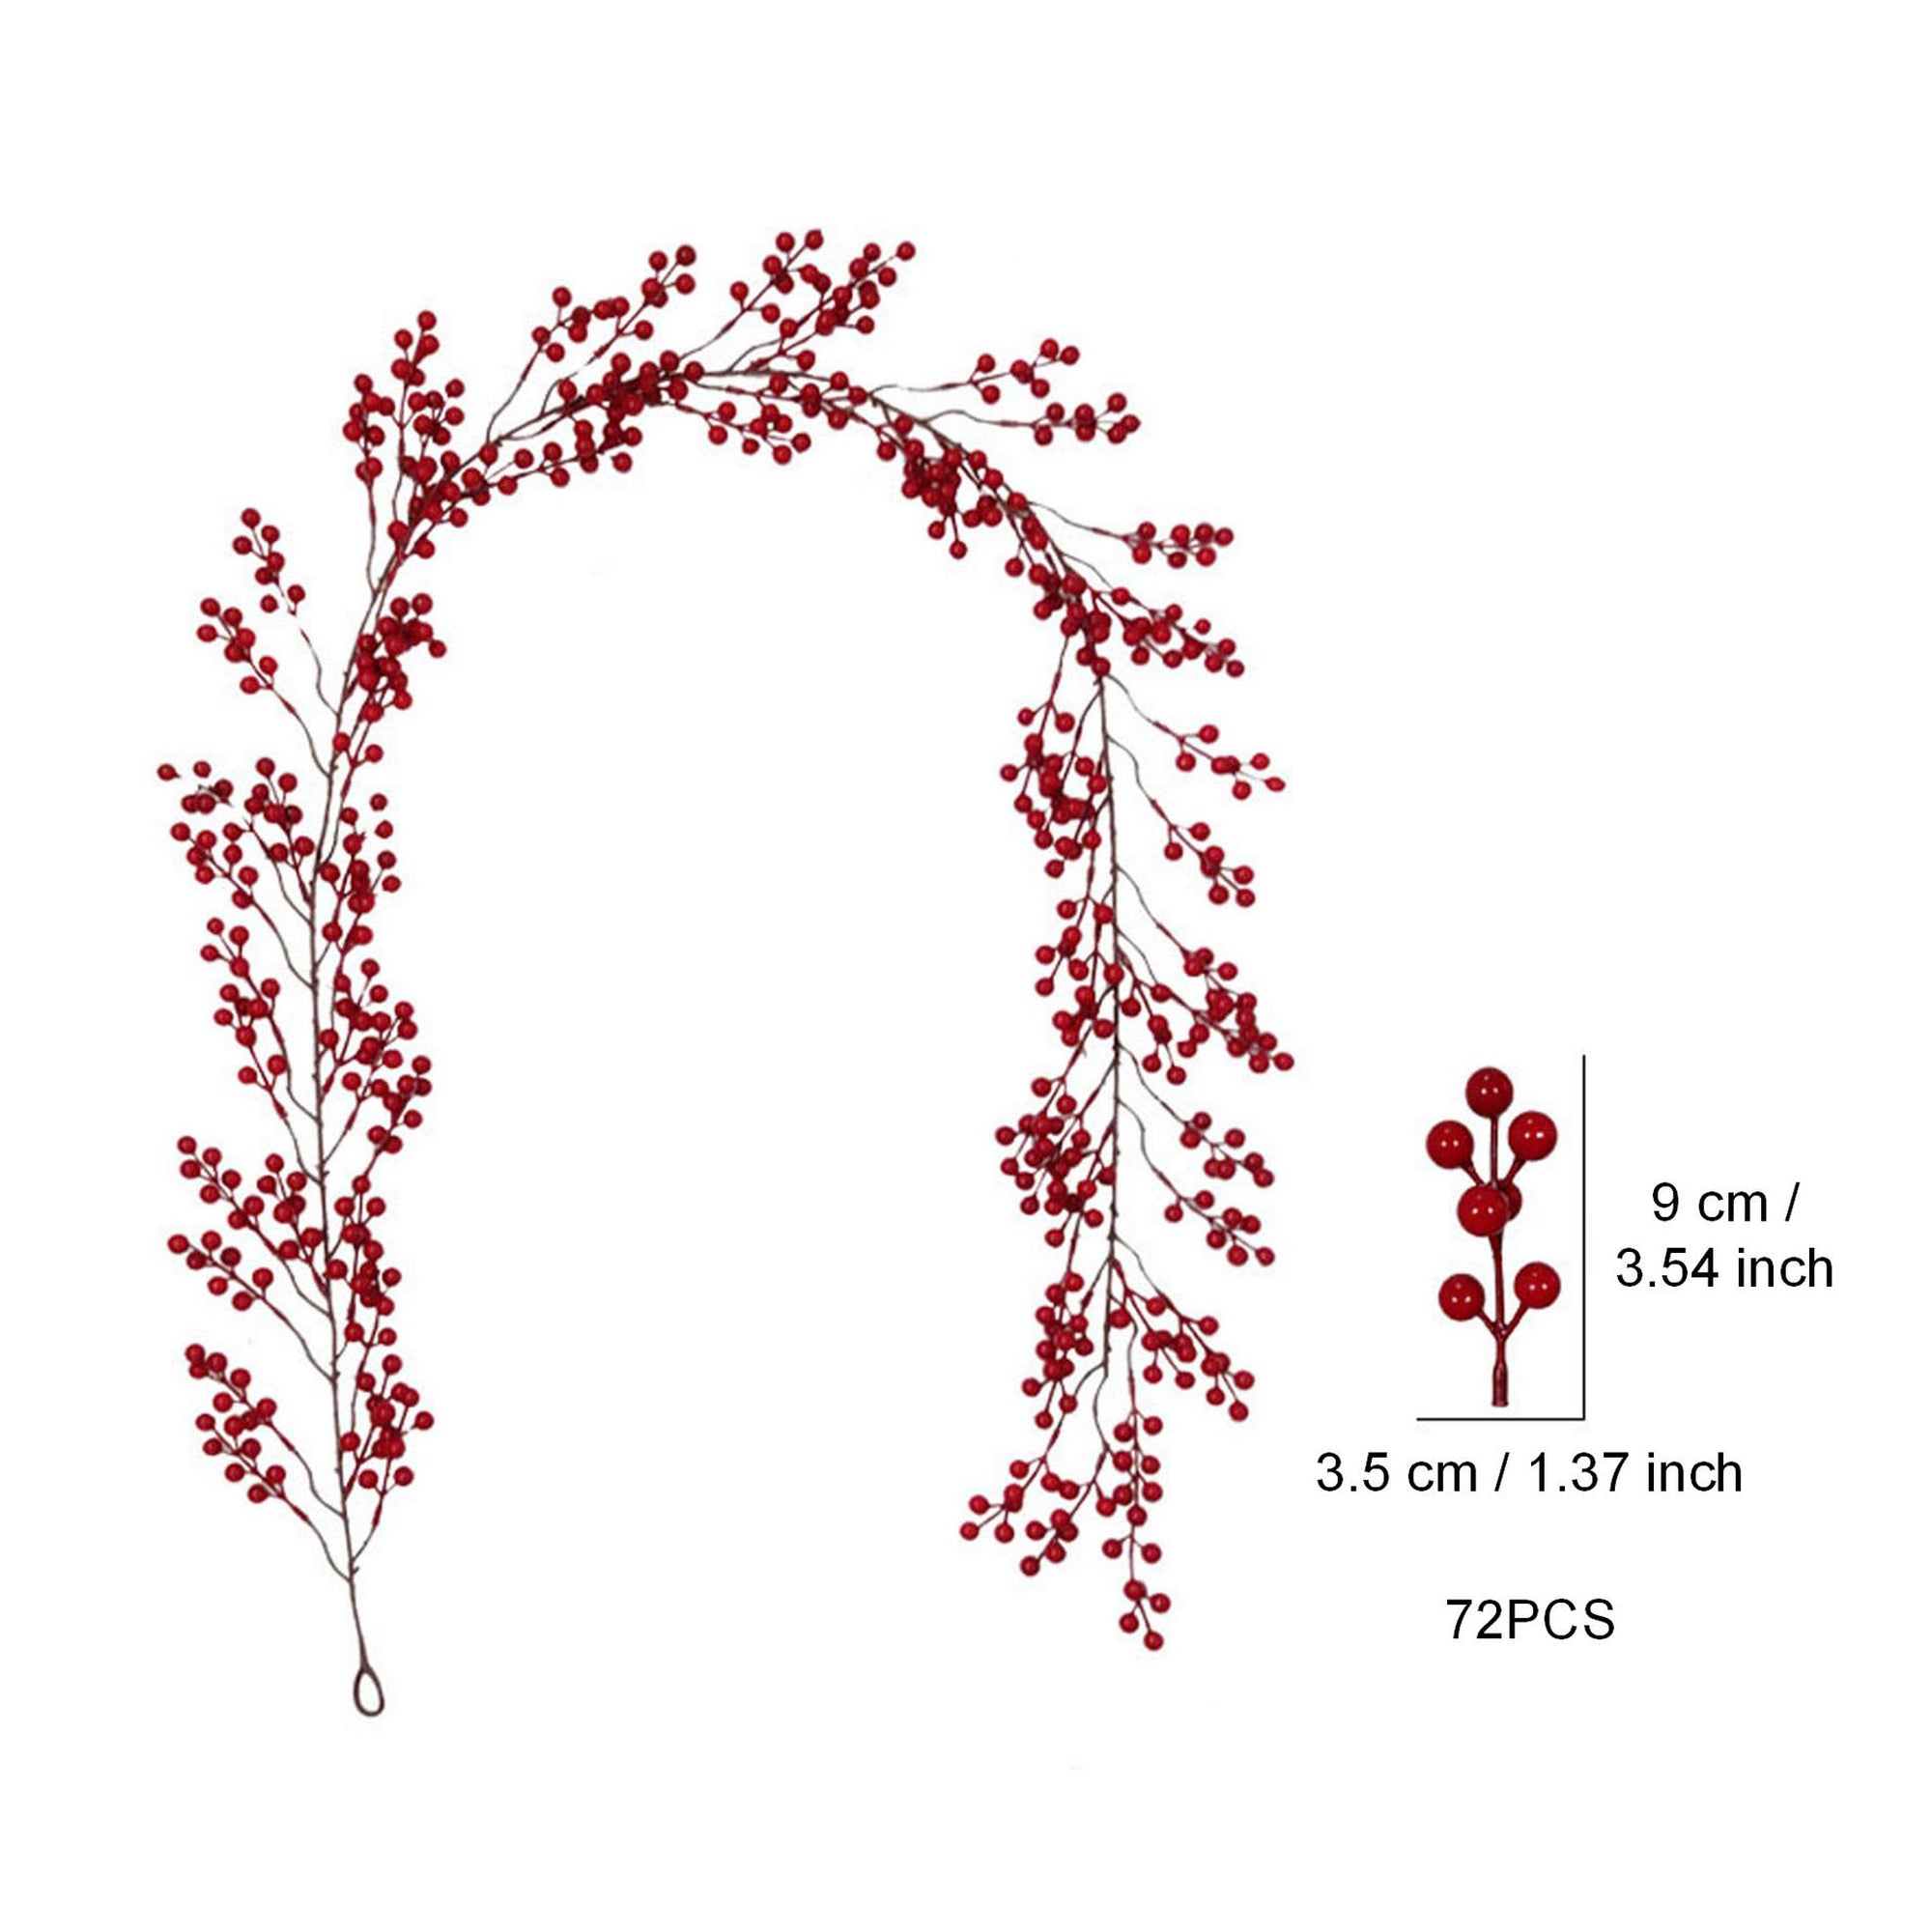 6.3 ft Artificial Red Berry Garlands for Xmas Indoor Outdoor Decor